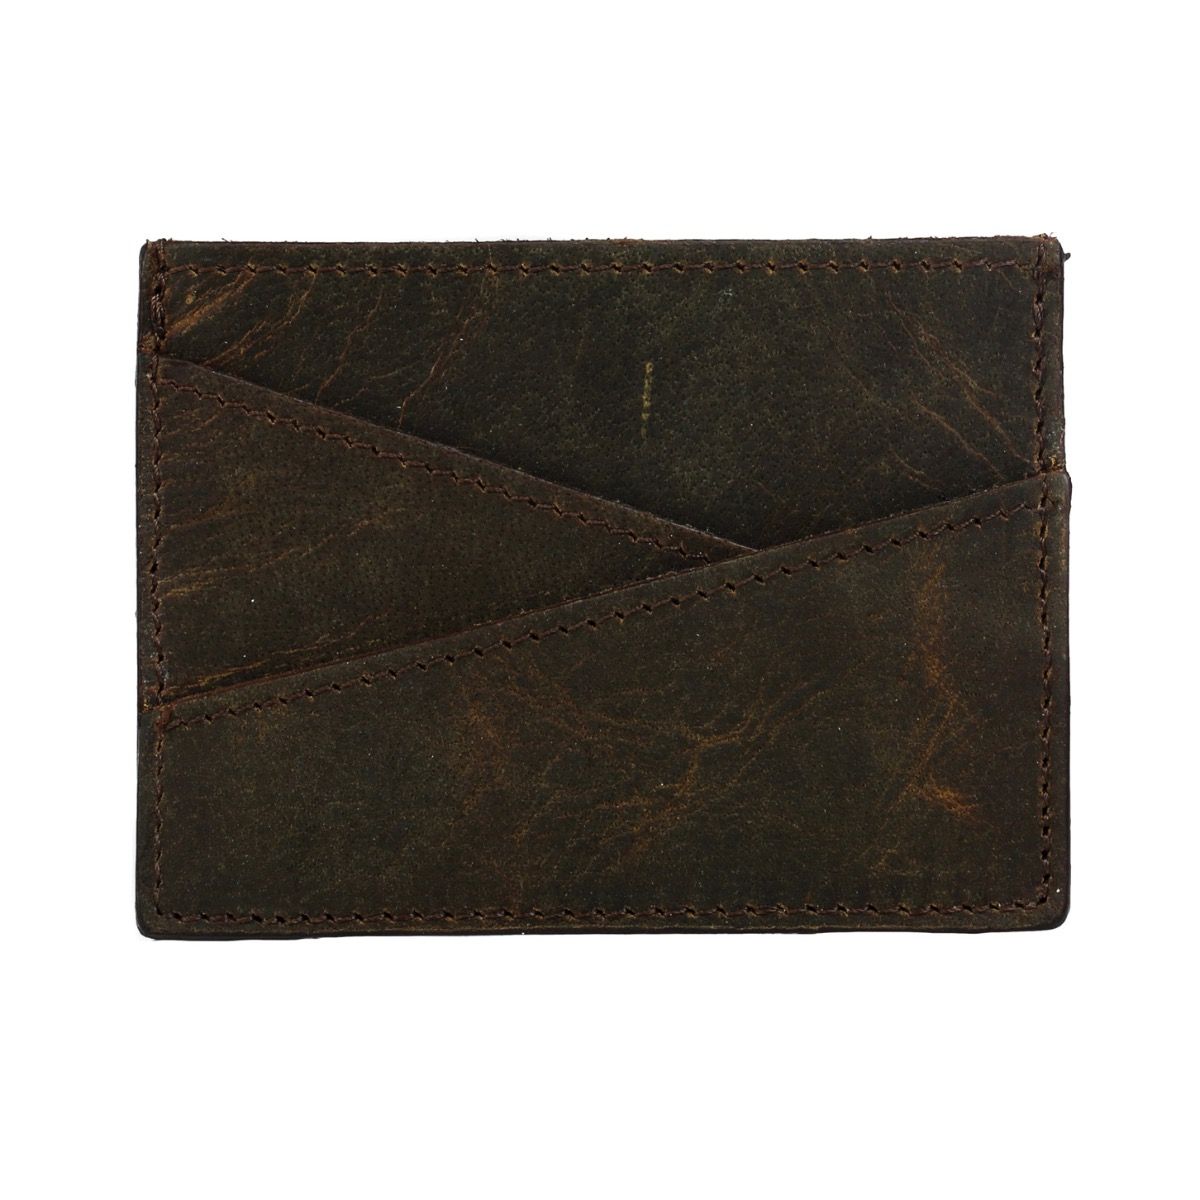 myra bag leather credit card holder